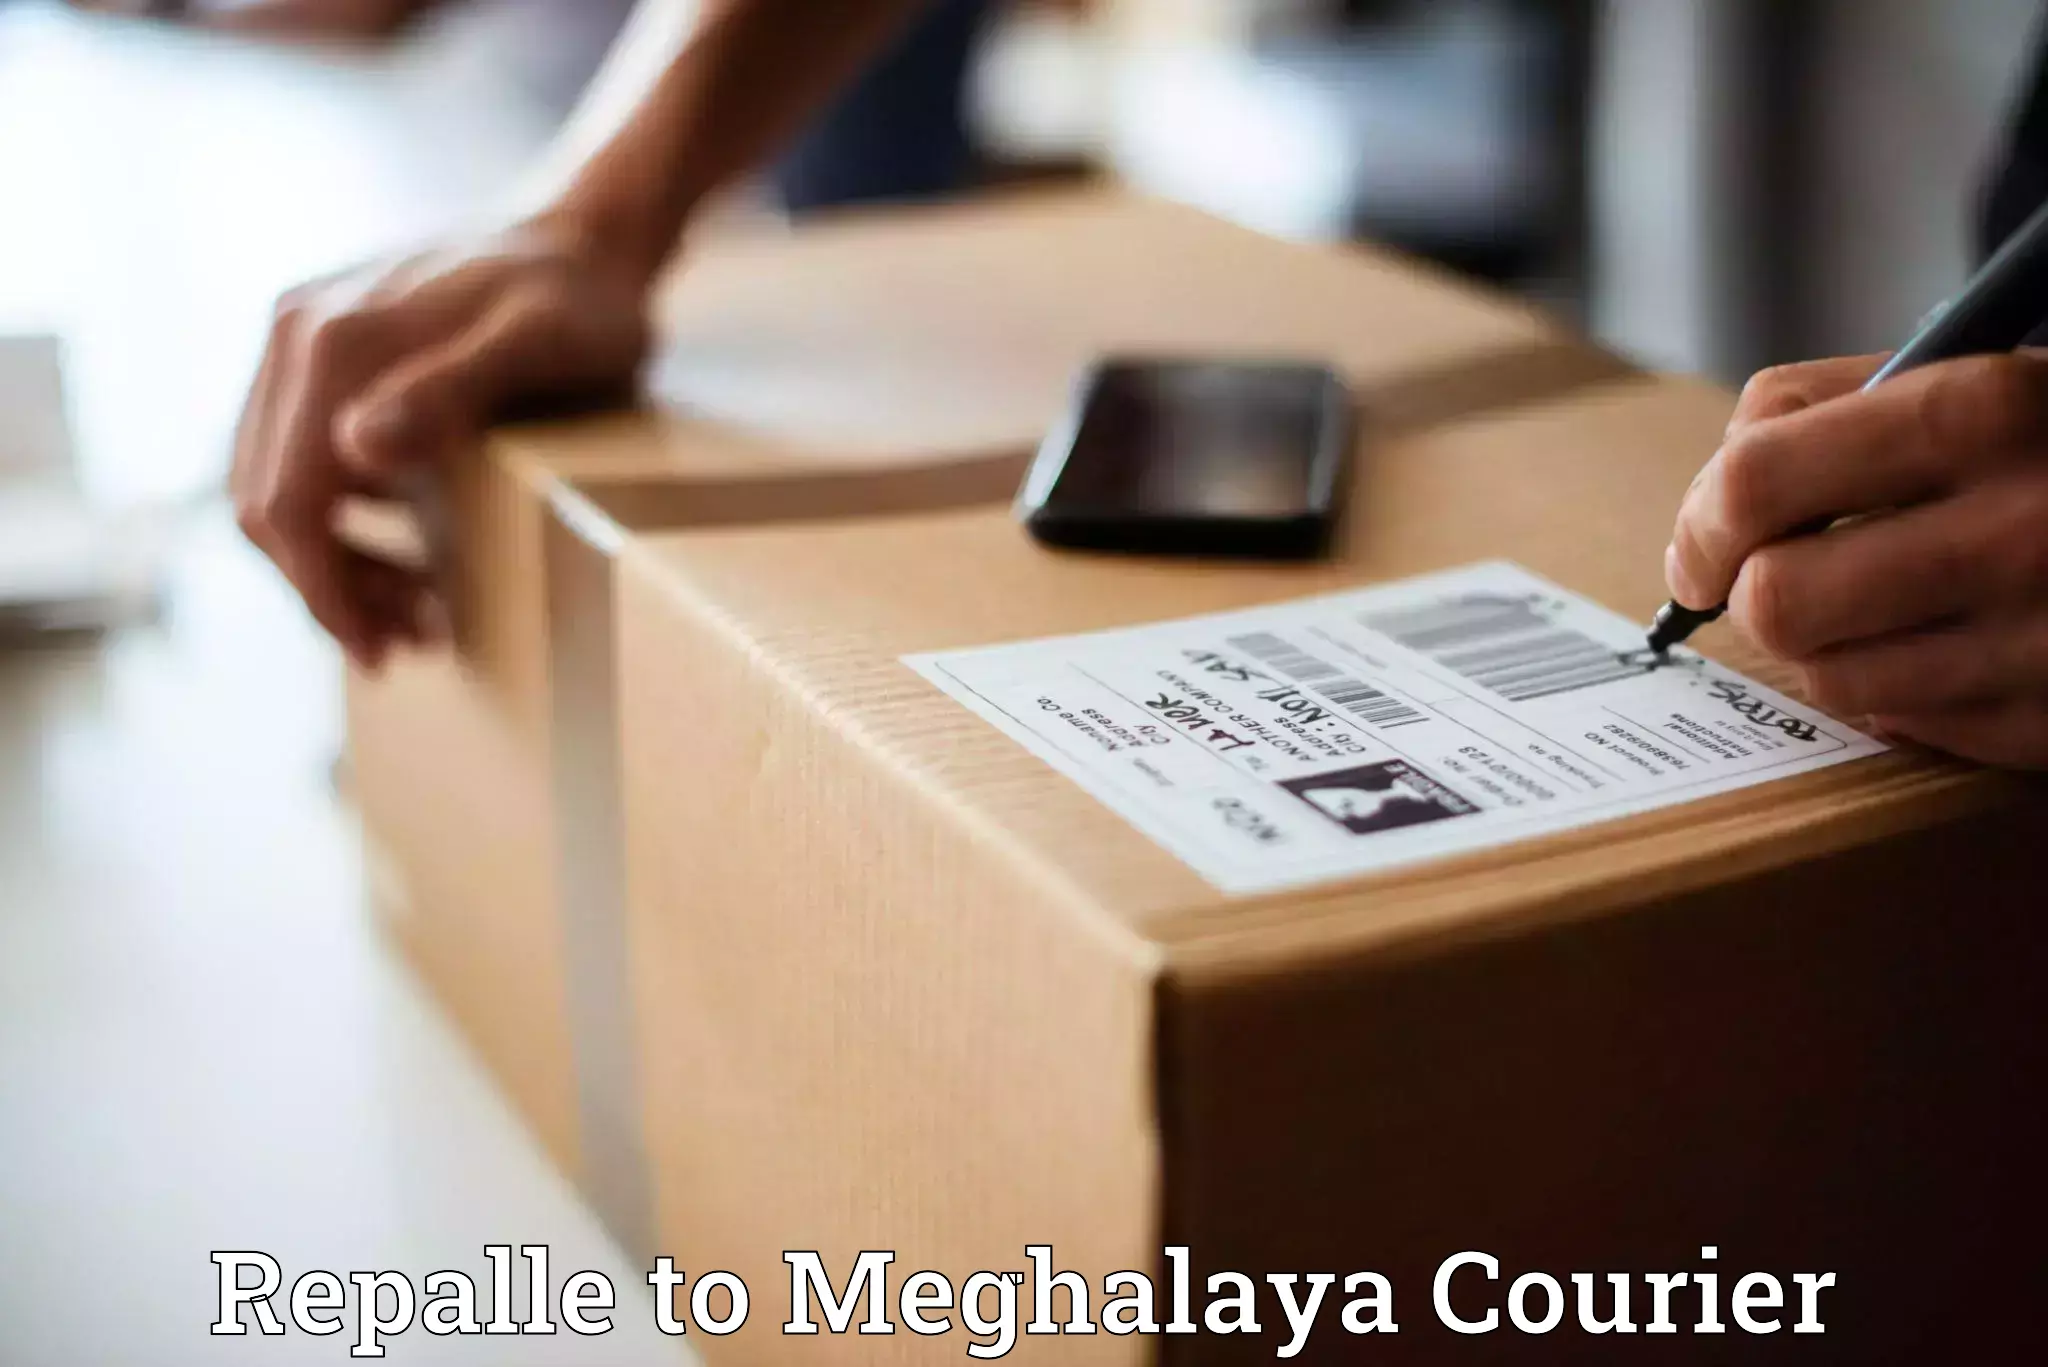 Nationwide courier service Repalle to Cherrapunji